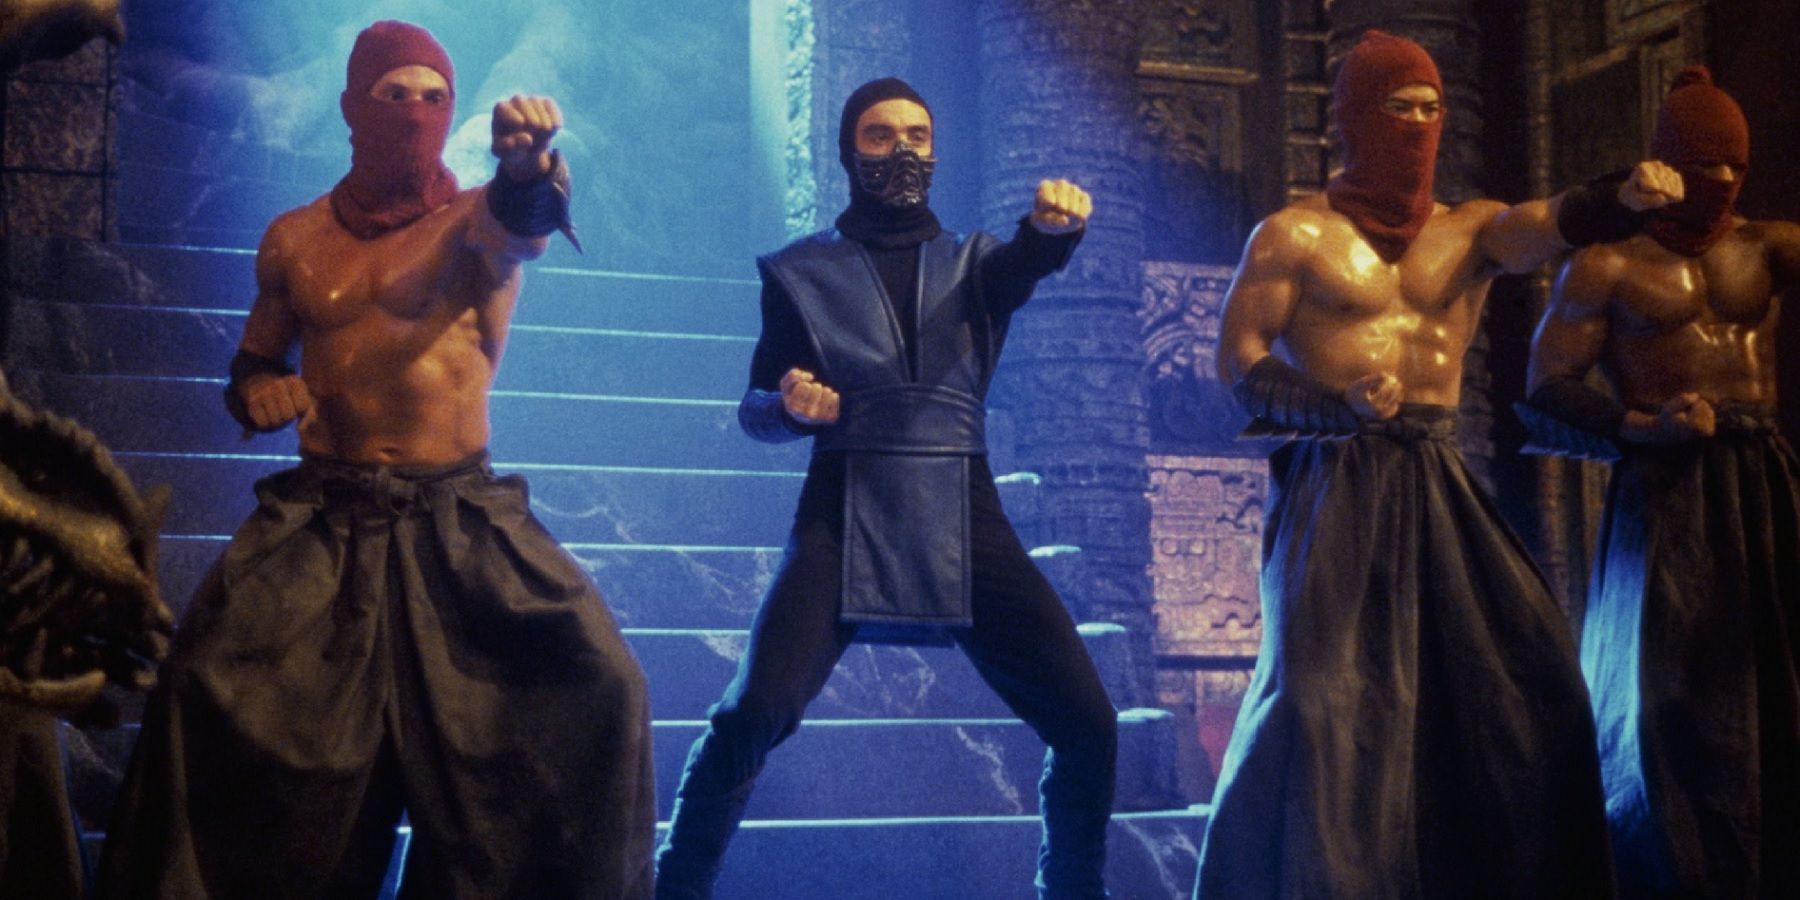 sub-zero-and-ninjas-punch-in-mortal-kombat-movie